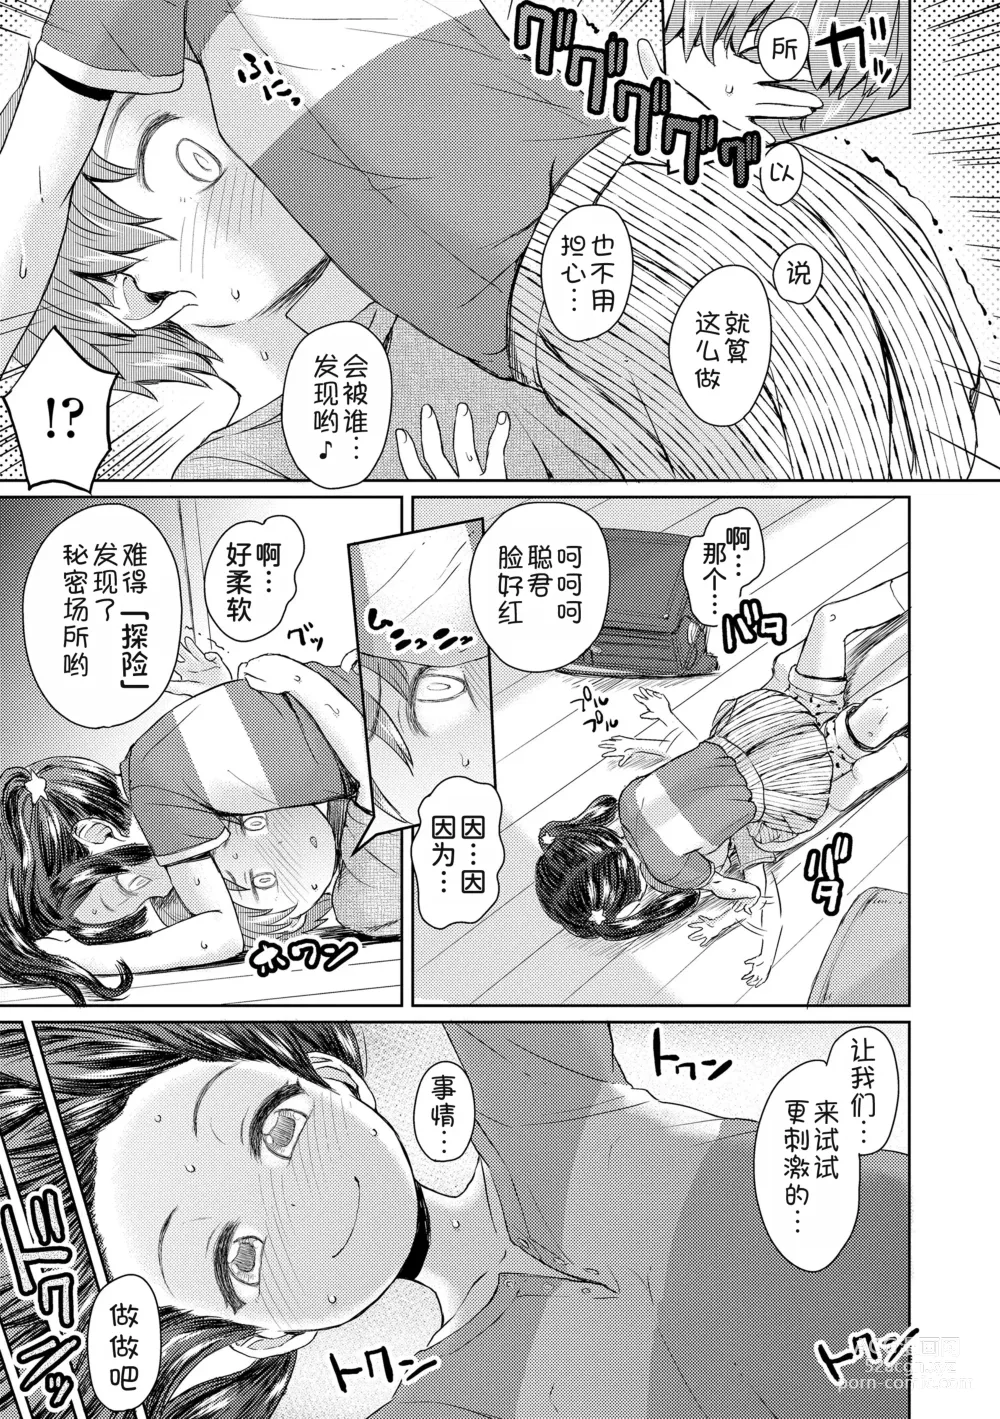 Page 6 of manga Akagane Danchi no Obake Heya Ch. 1-3